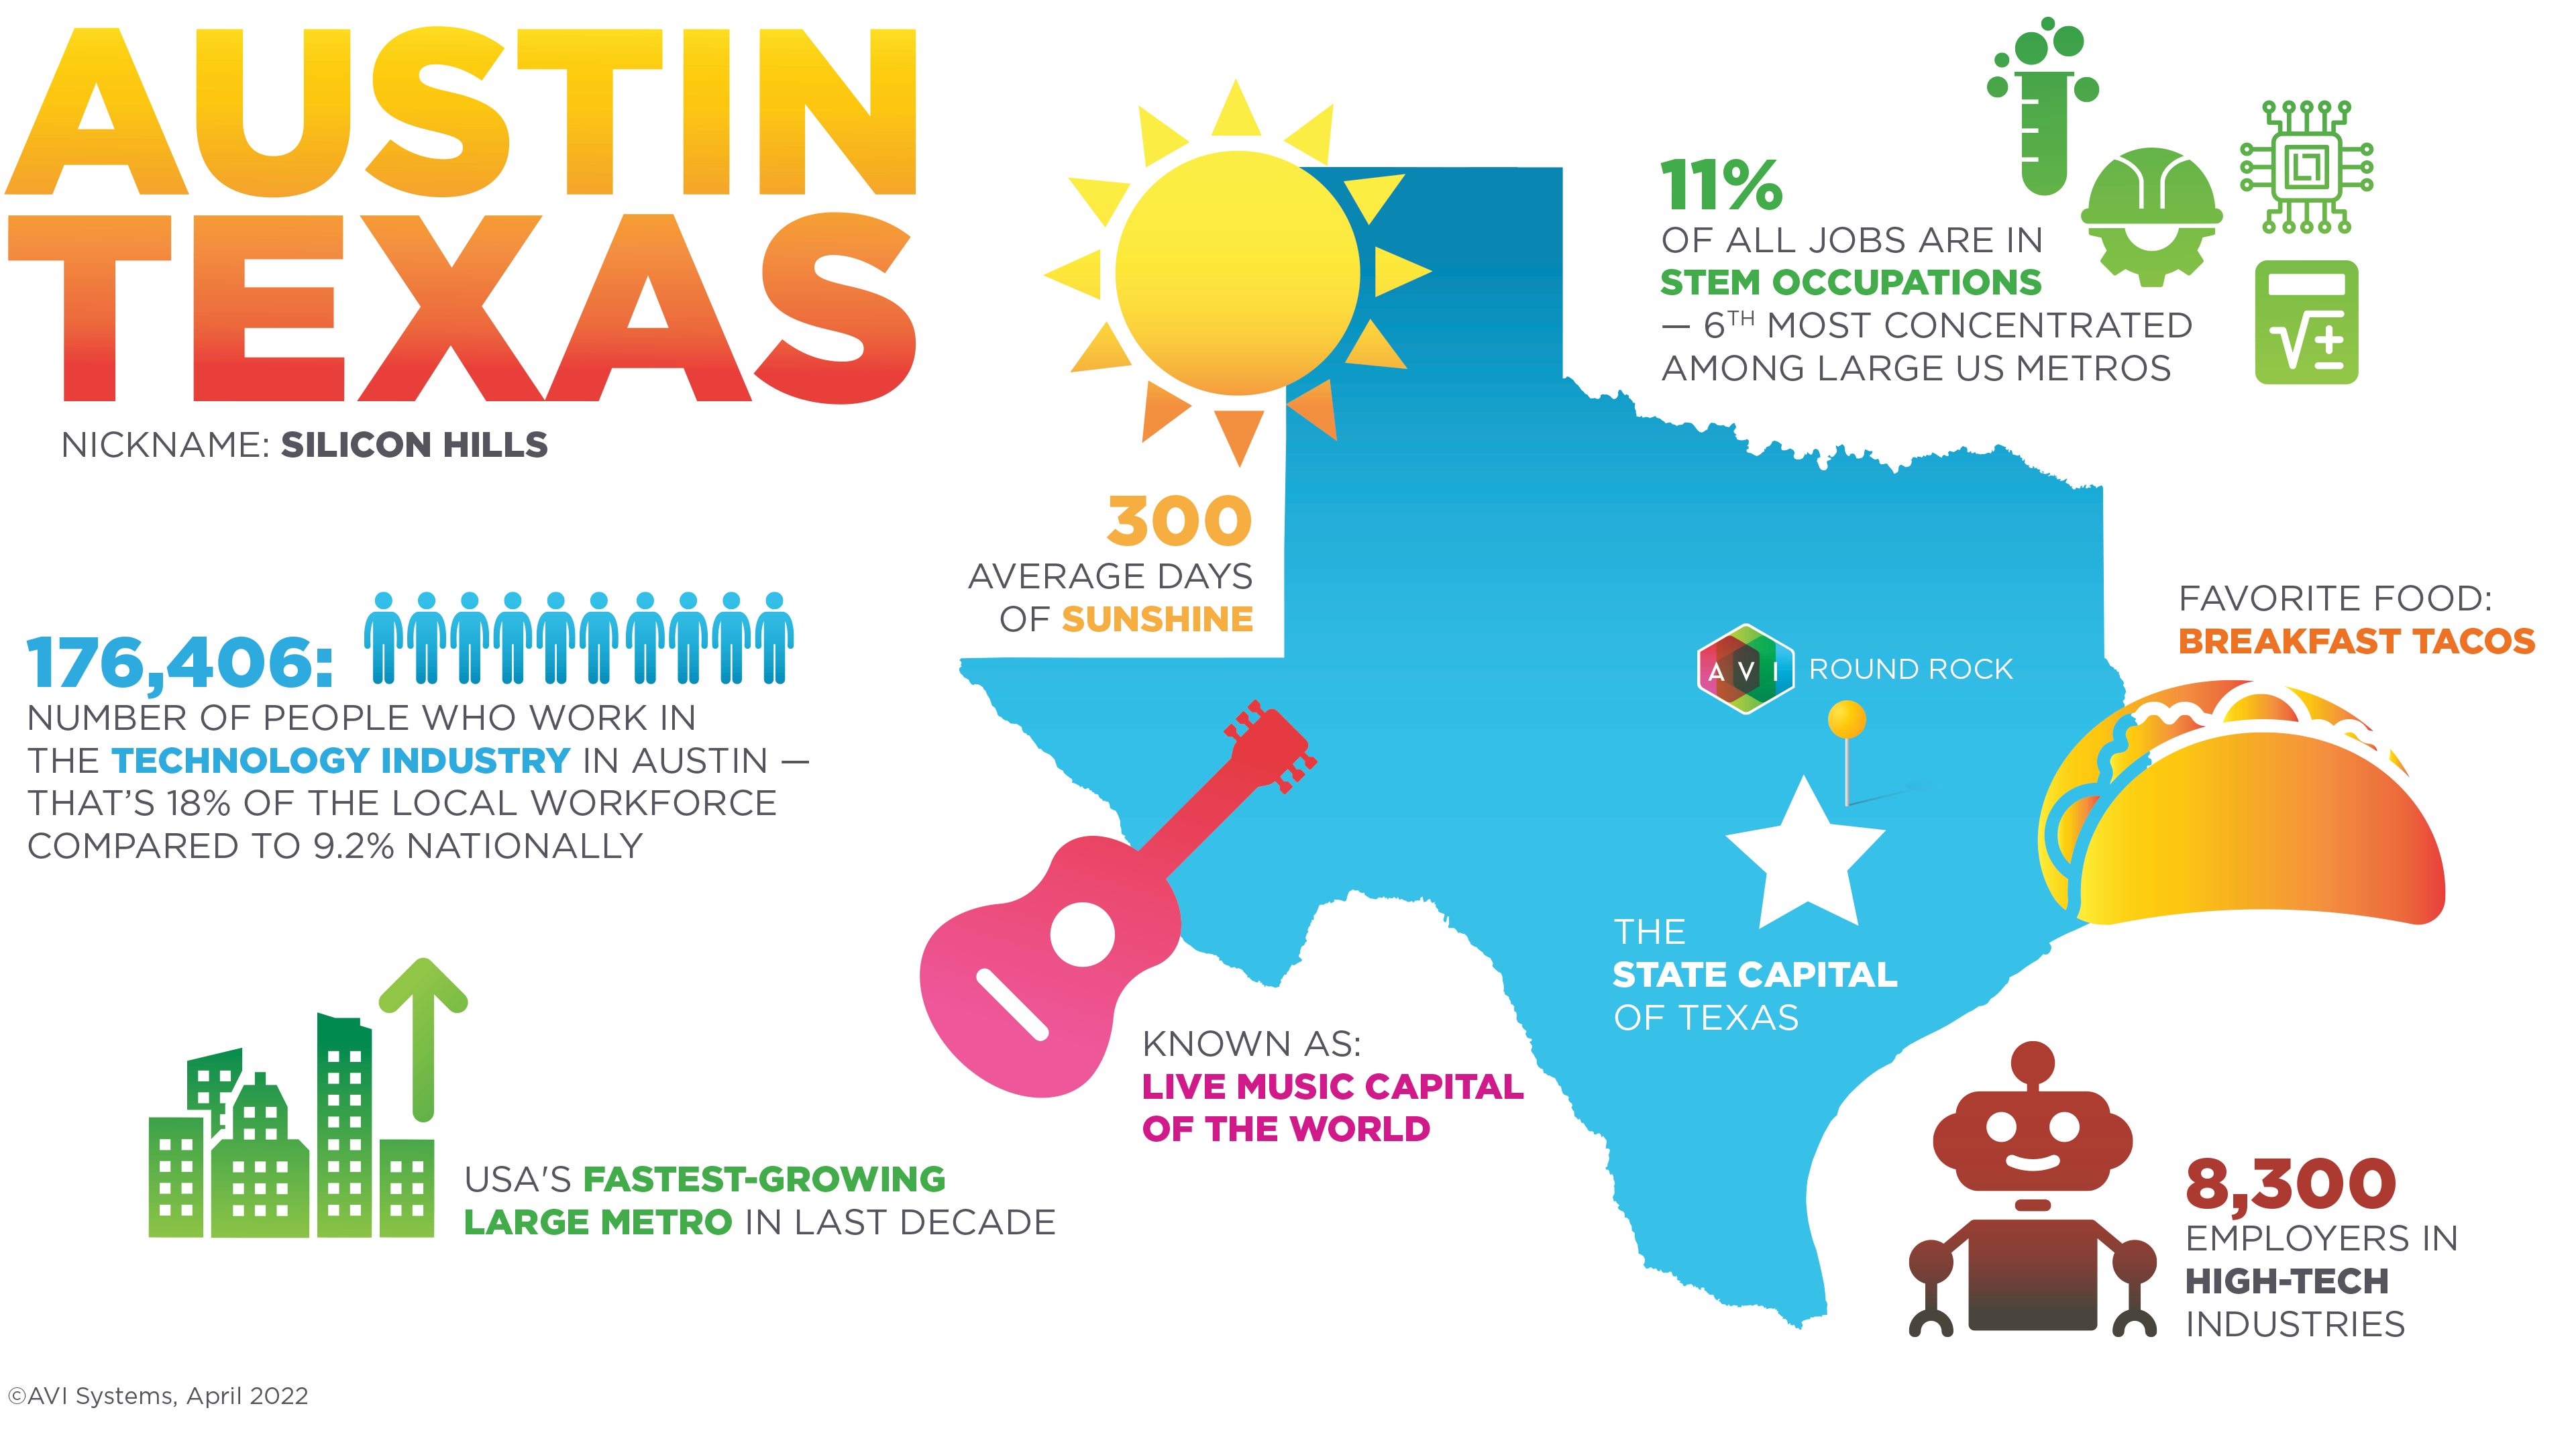 Austin TX infographic v3